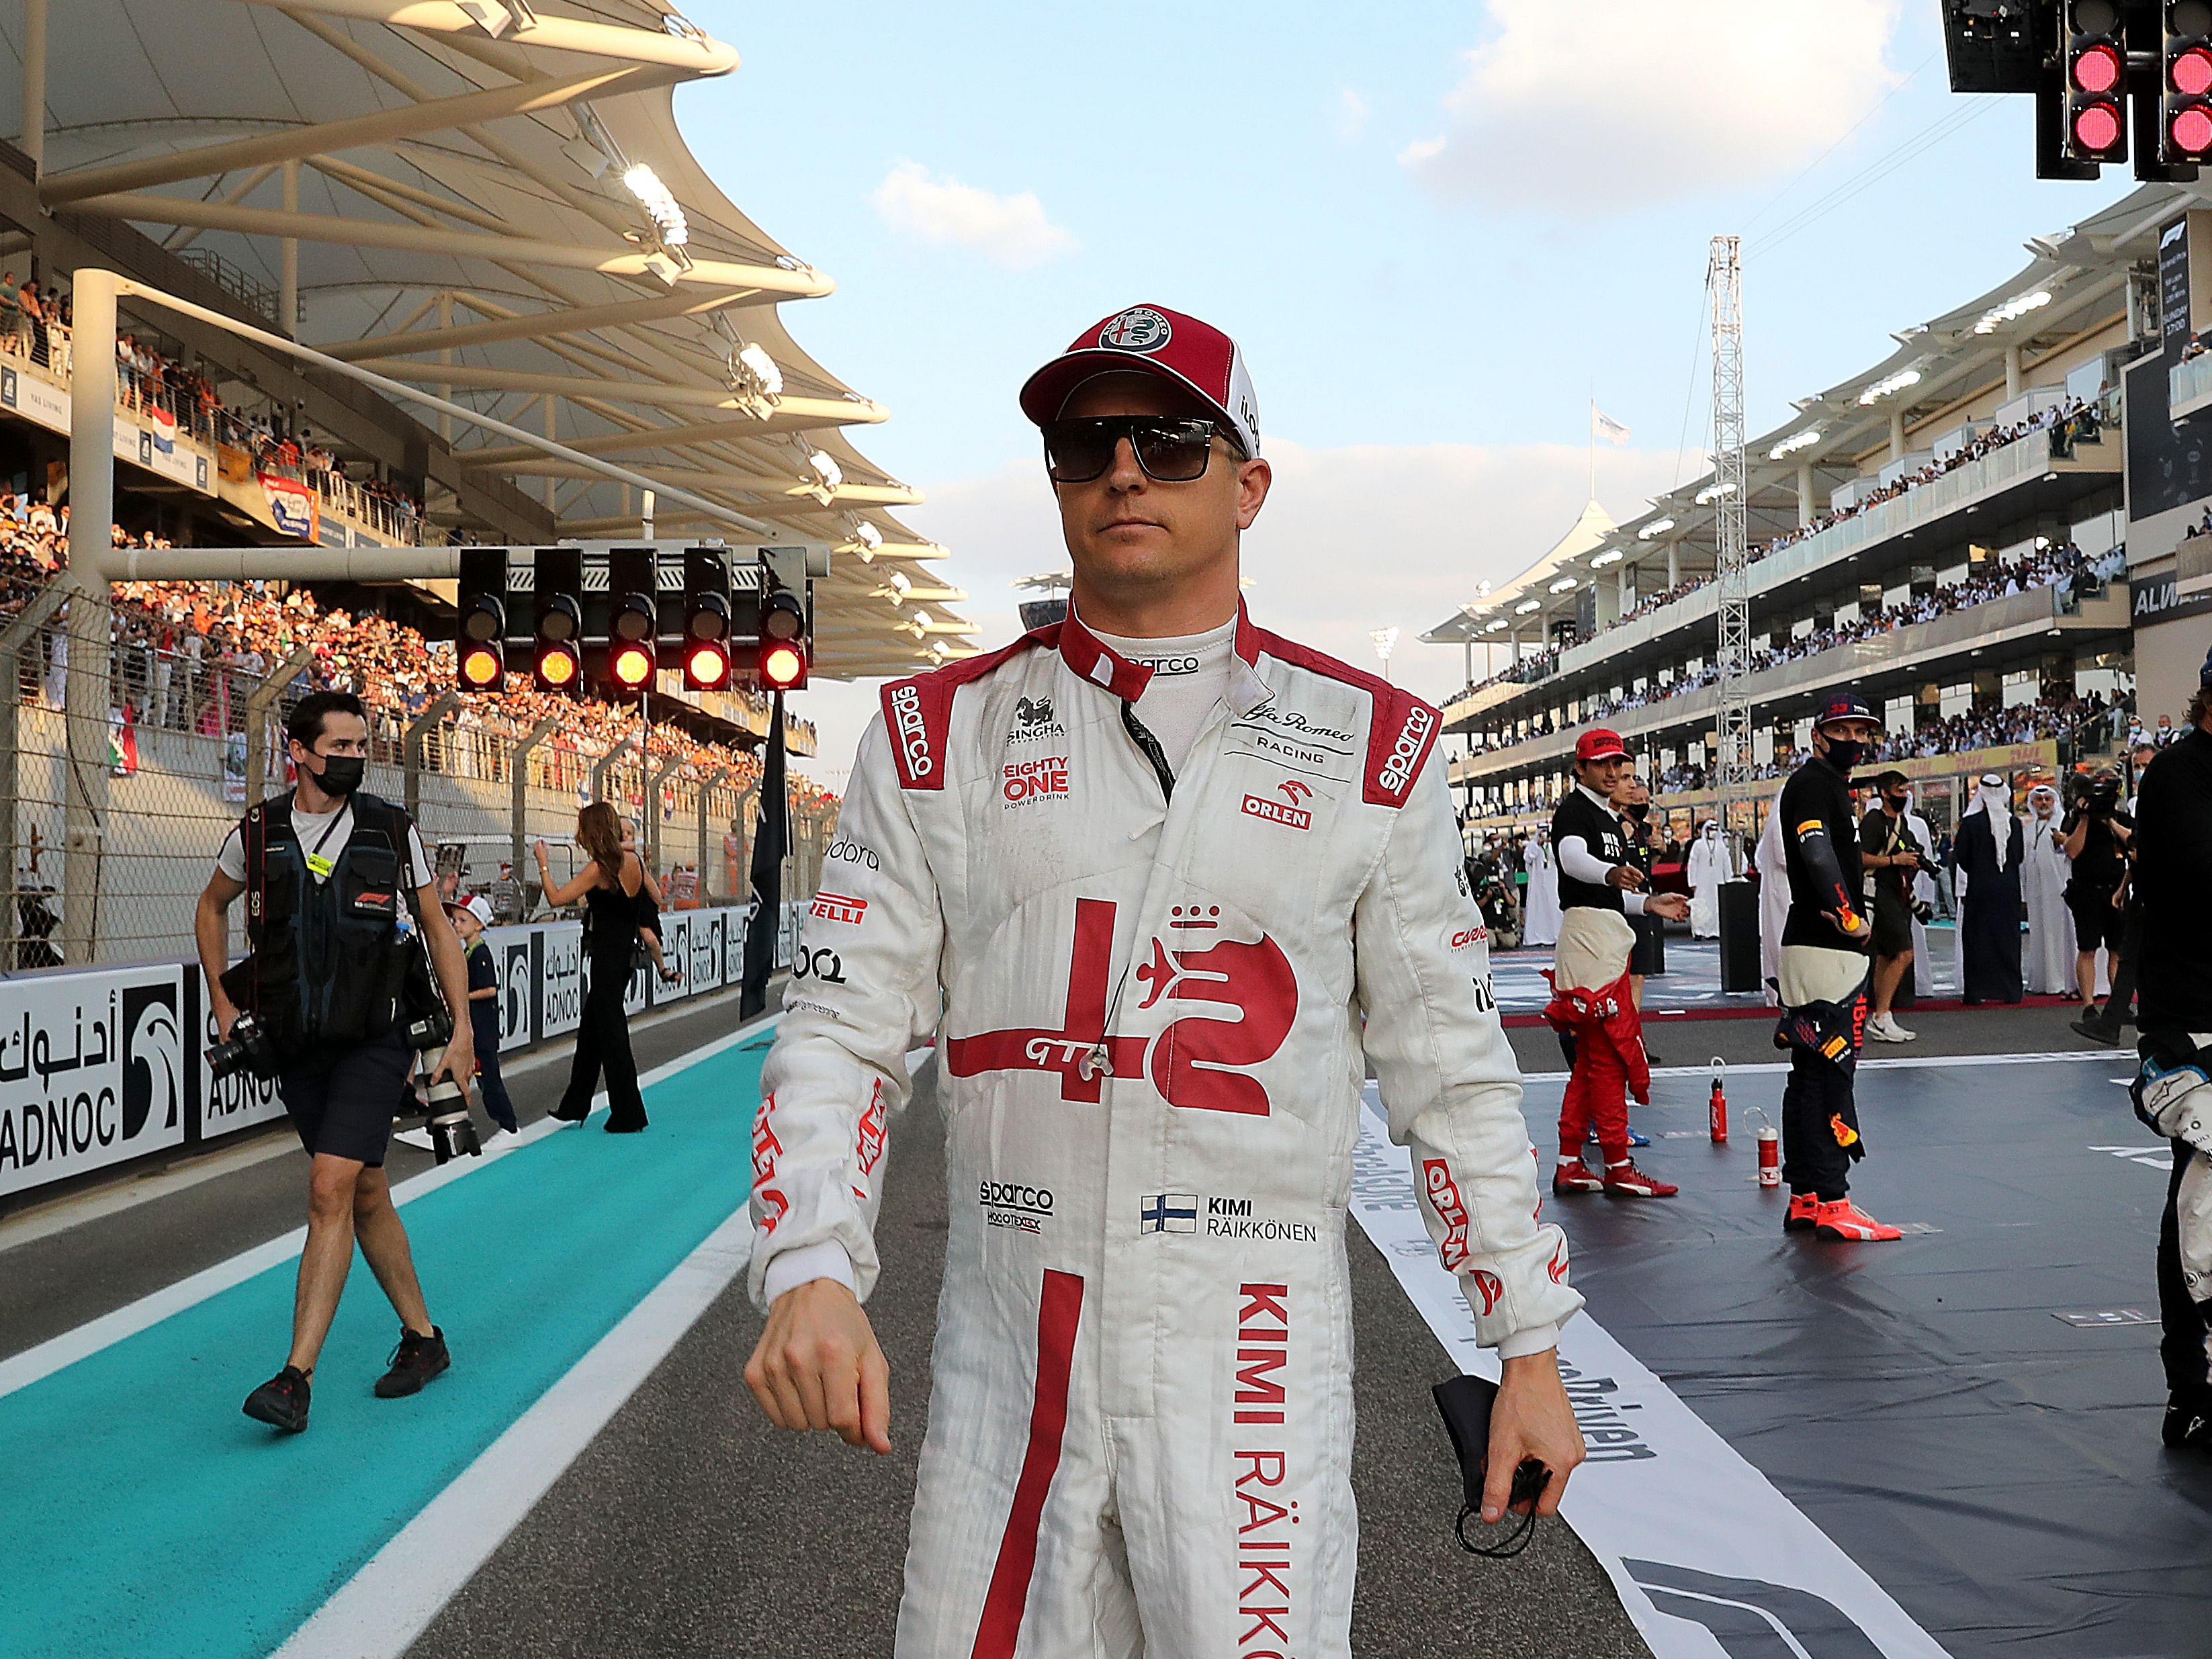 Kimi Raikkonen walks on the grid prior to the 2021 F1 Abu Dhabi Grand Prix (Photo by Kamran Jebreili - Pool/Getty Images)